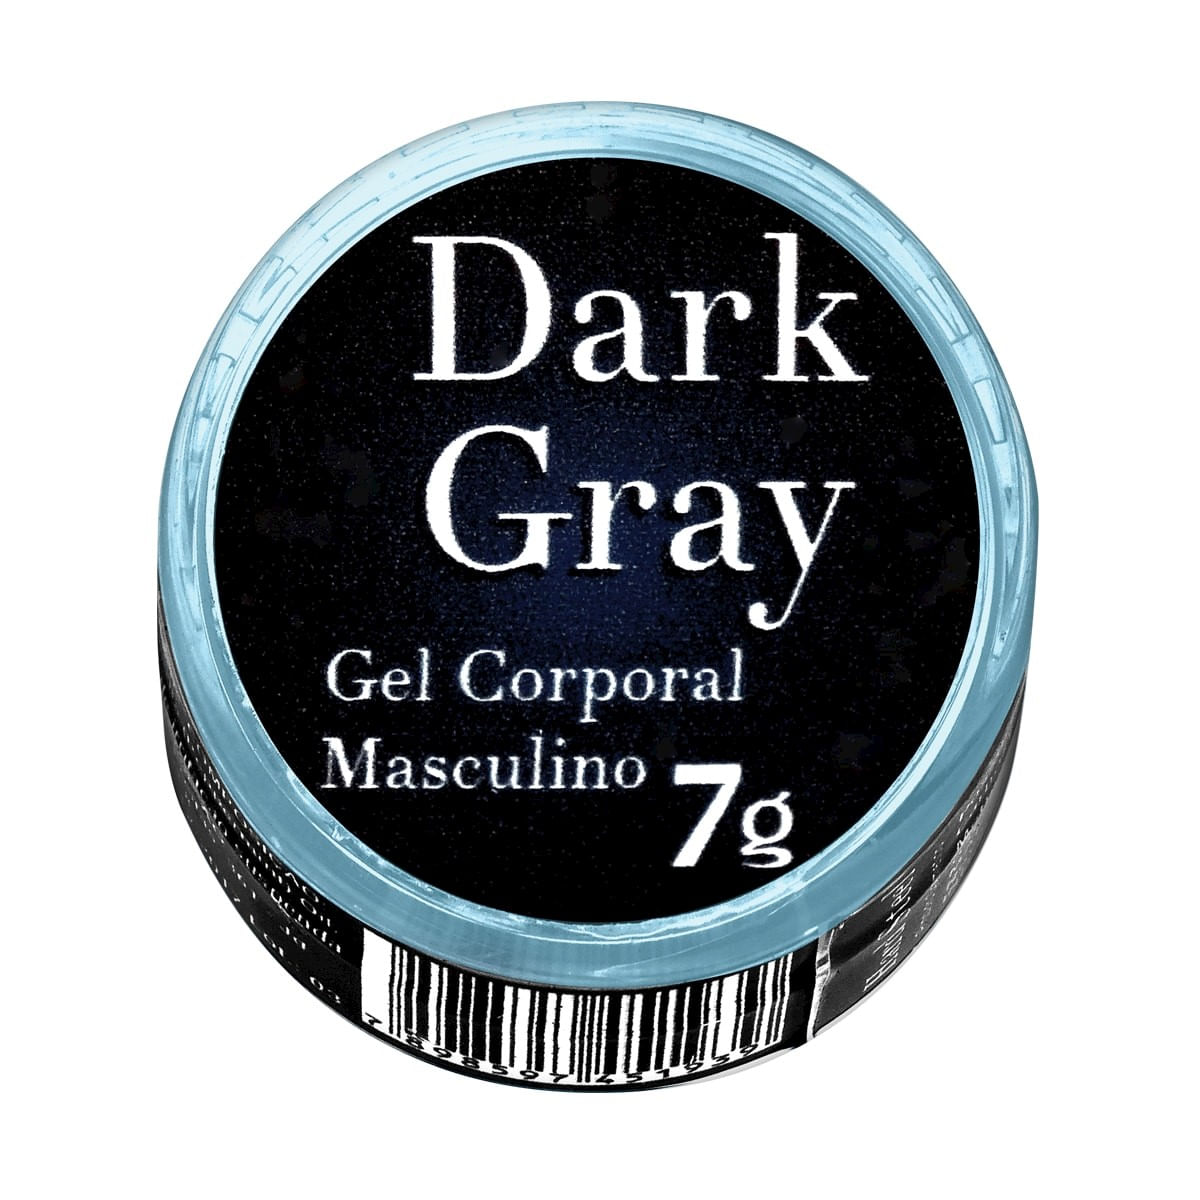 Dark Gray Gel Corporal Masculino 7g Garji